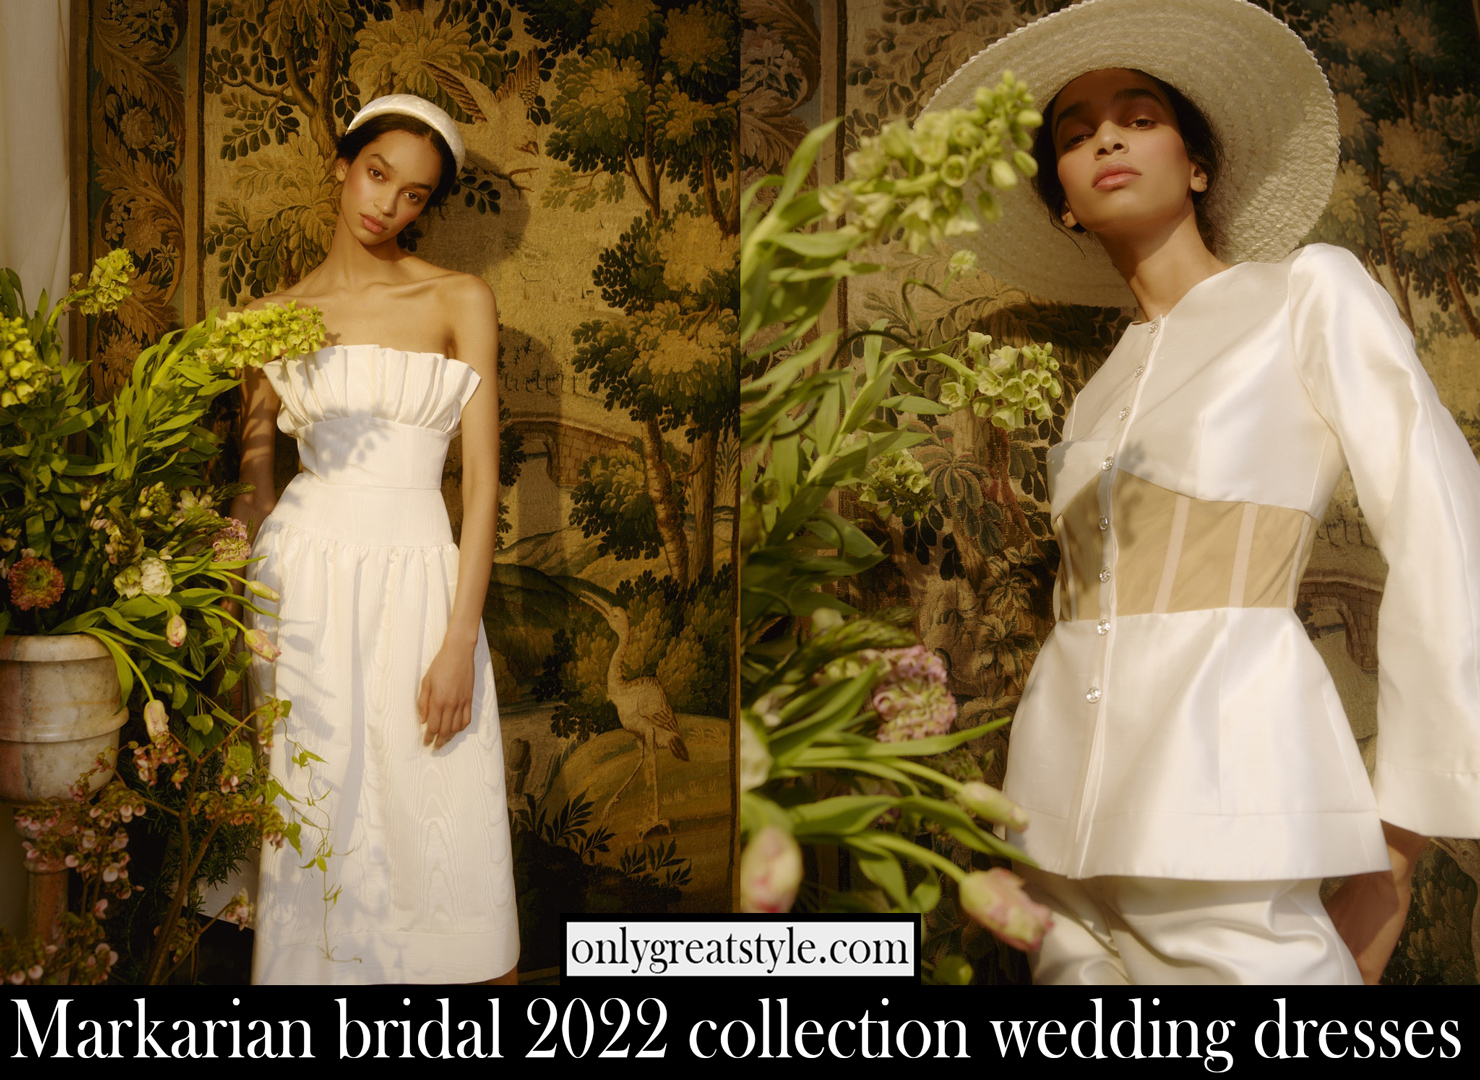 Markarian bridal 2022 collection wedding dresses